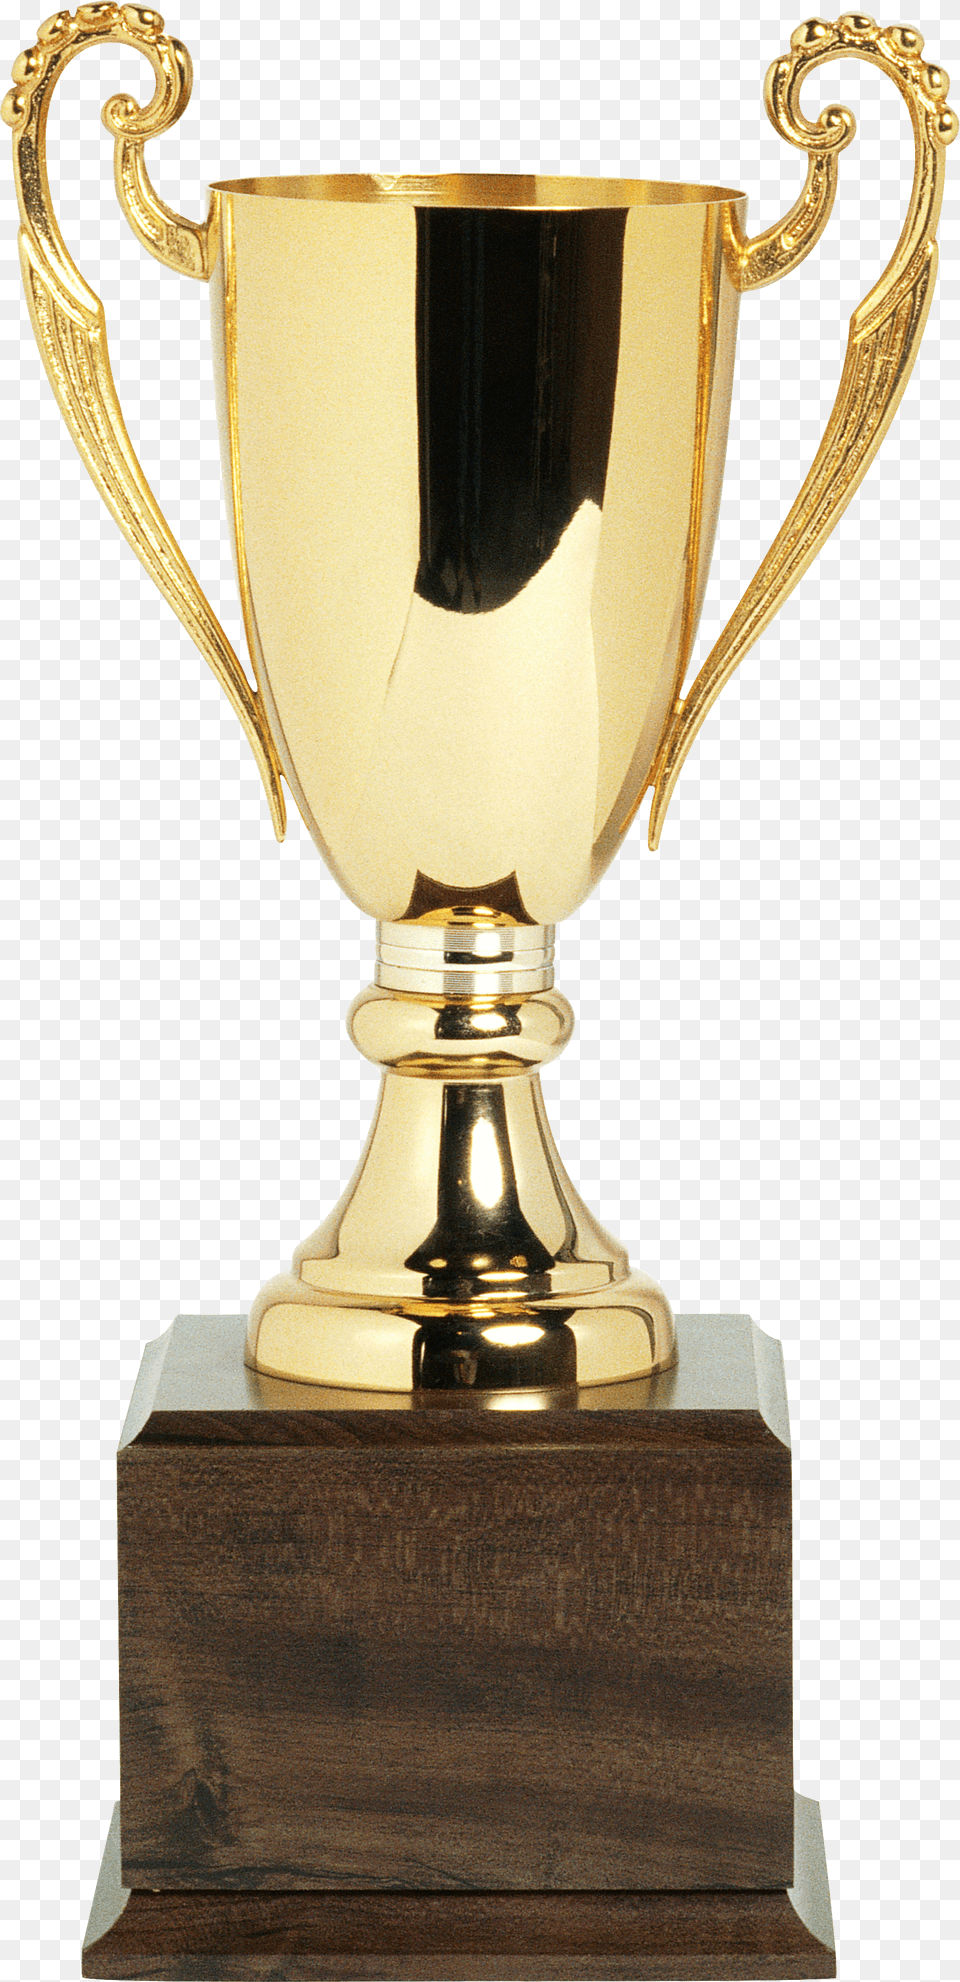 Golden Cup, Jar Png Image